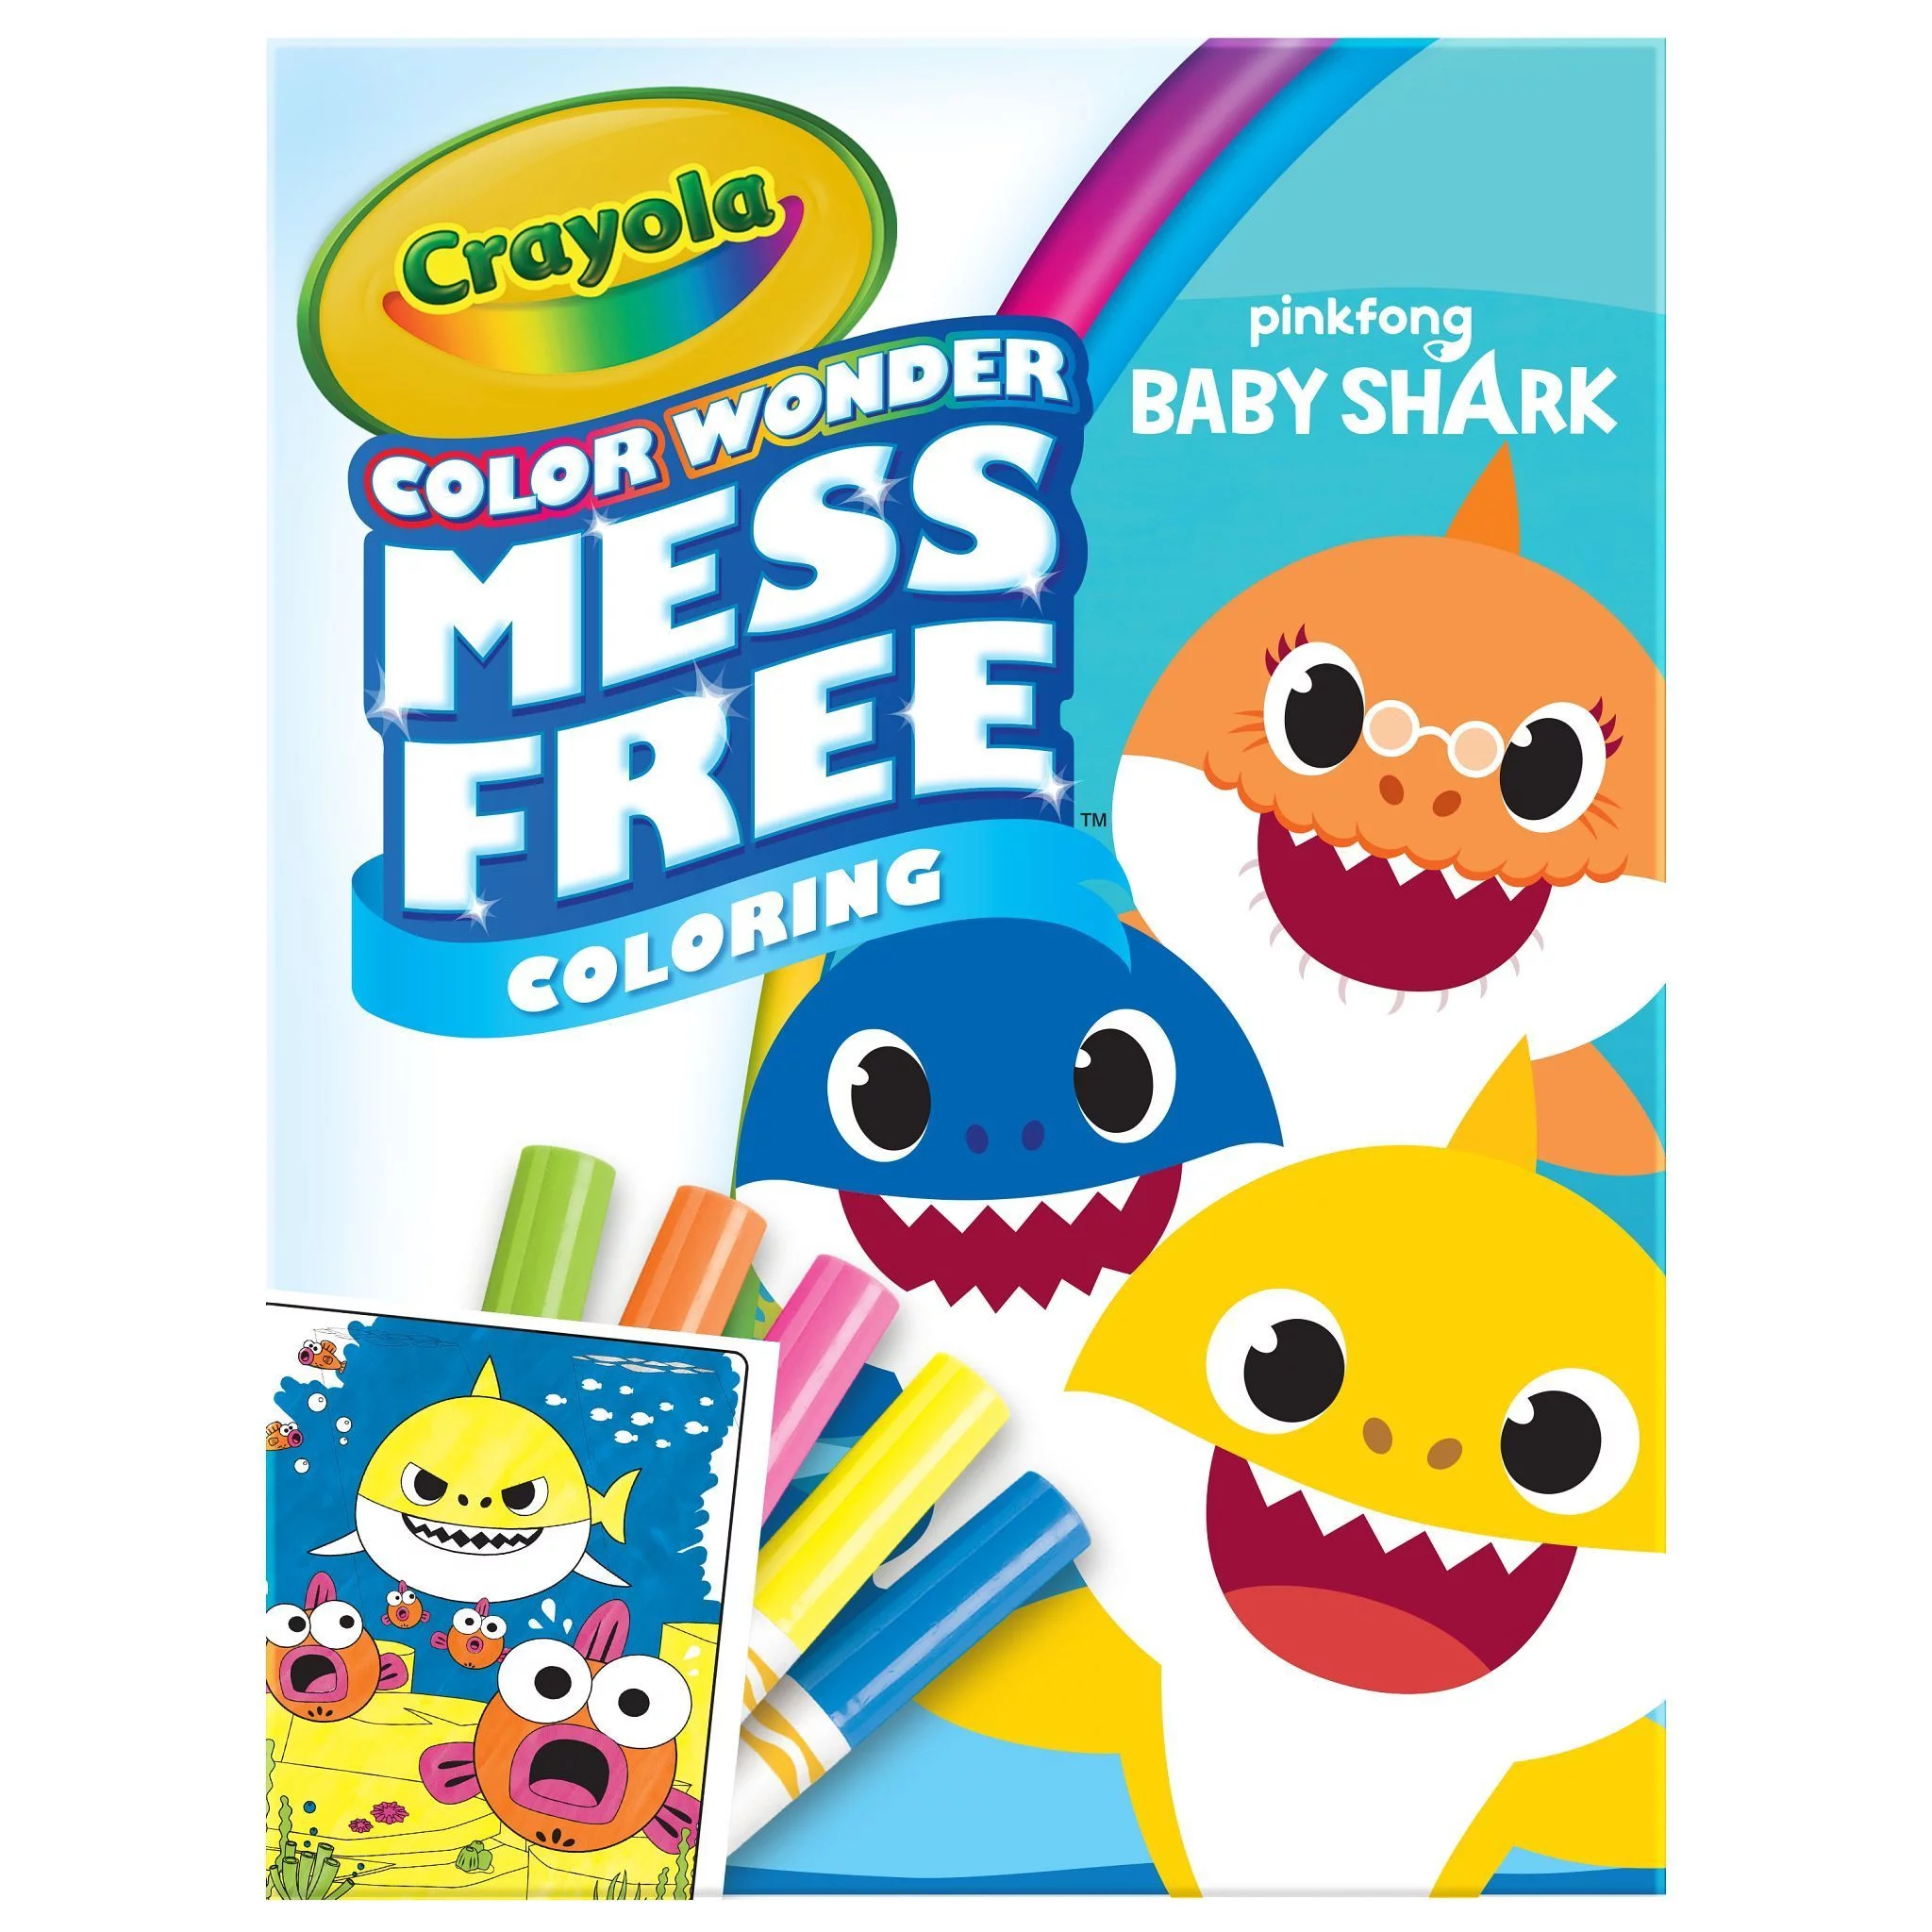 Crayola Color Wonder Mess Free Baby Shark Coloring Set, 23 Pieces, Beginner Unisex Child